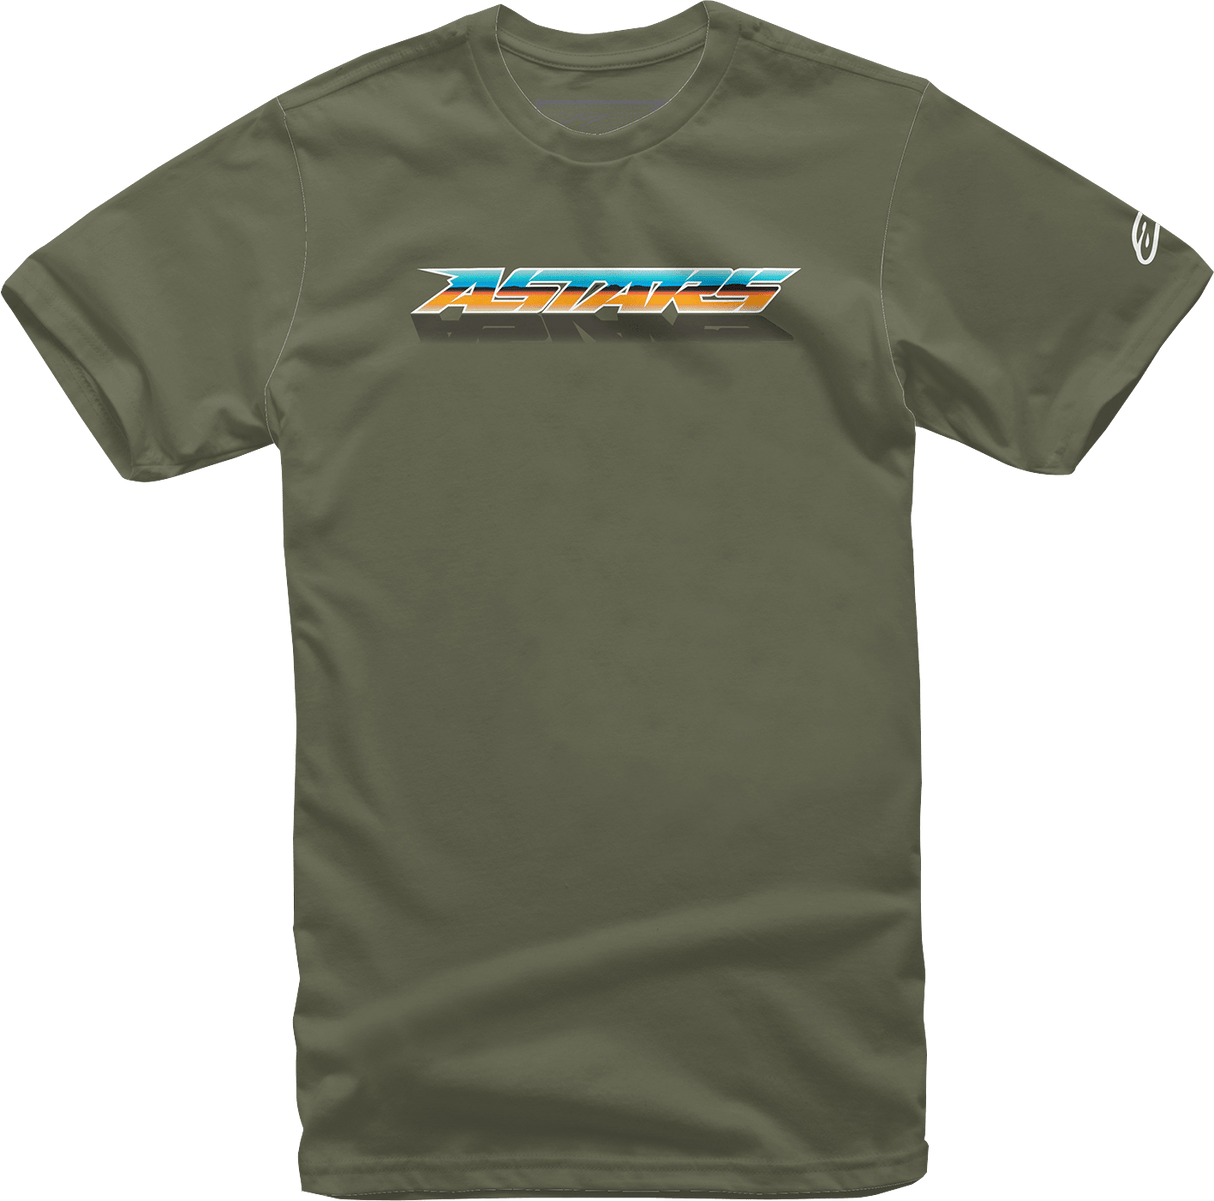 ALPINESTARS Chromium T - Shirt - Military - Large 1232 - 72206 - 690L - Electrek Moto